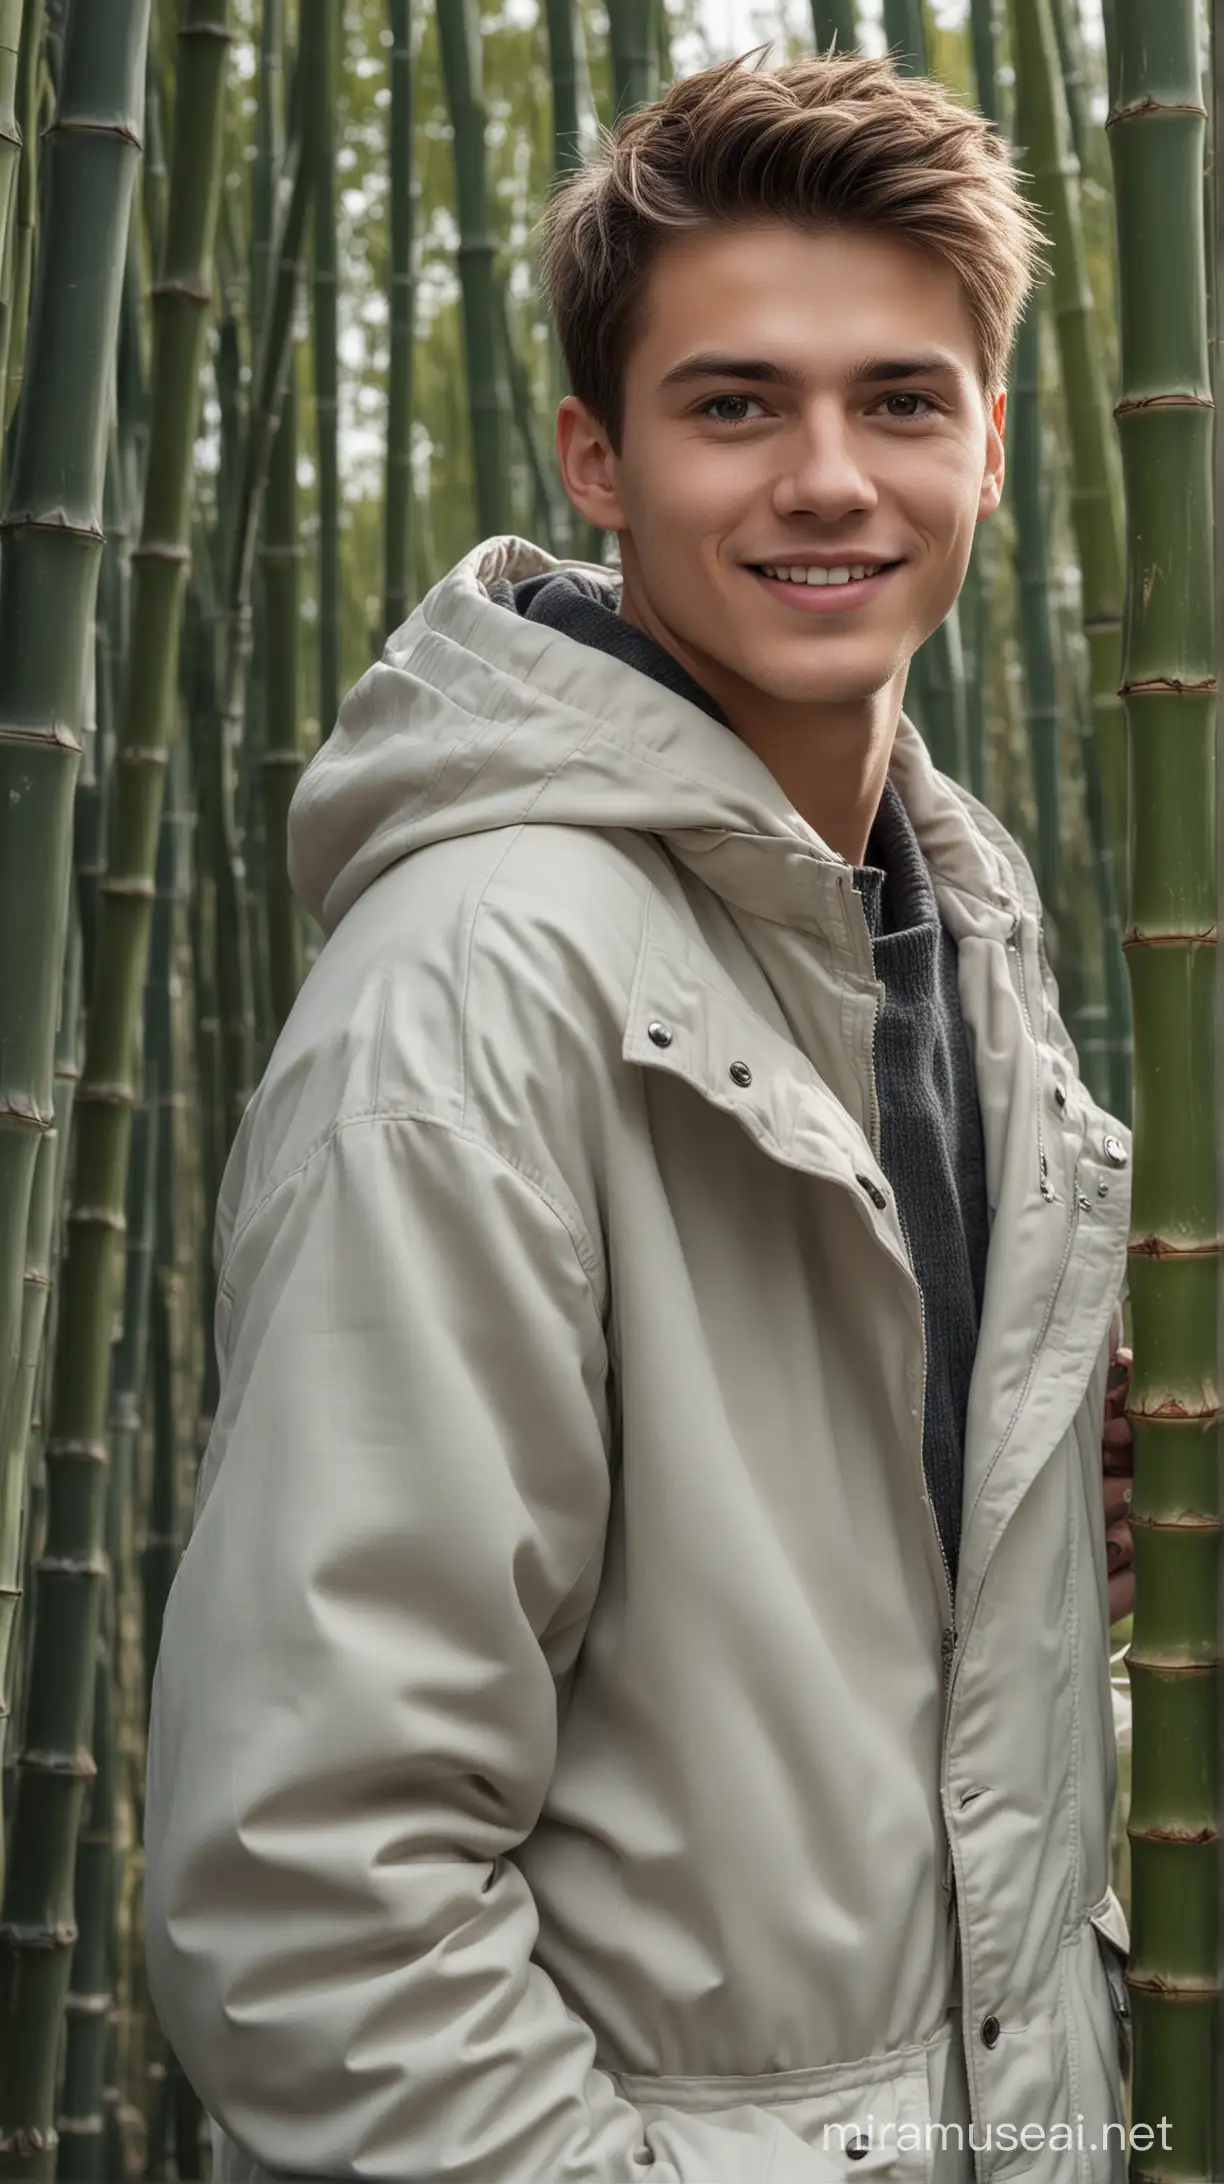 Handsome Man in Winter Jacket Smiling Amidst Bamboo Landscape